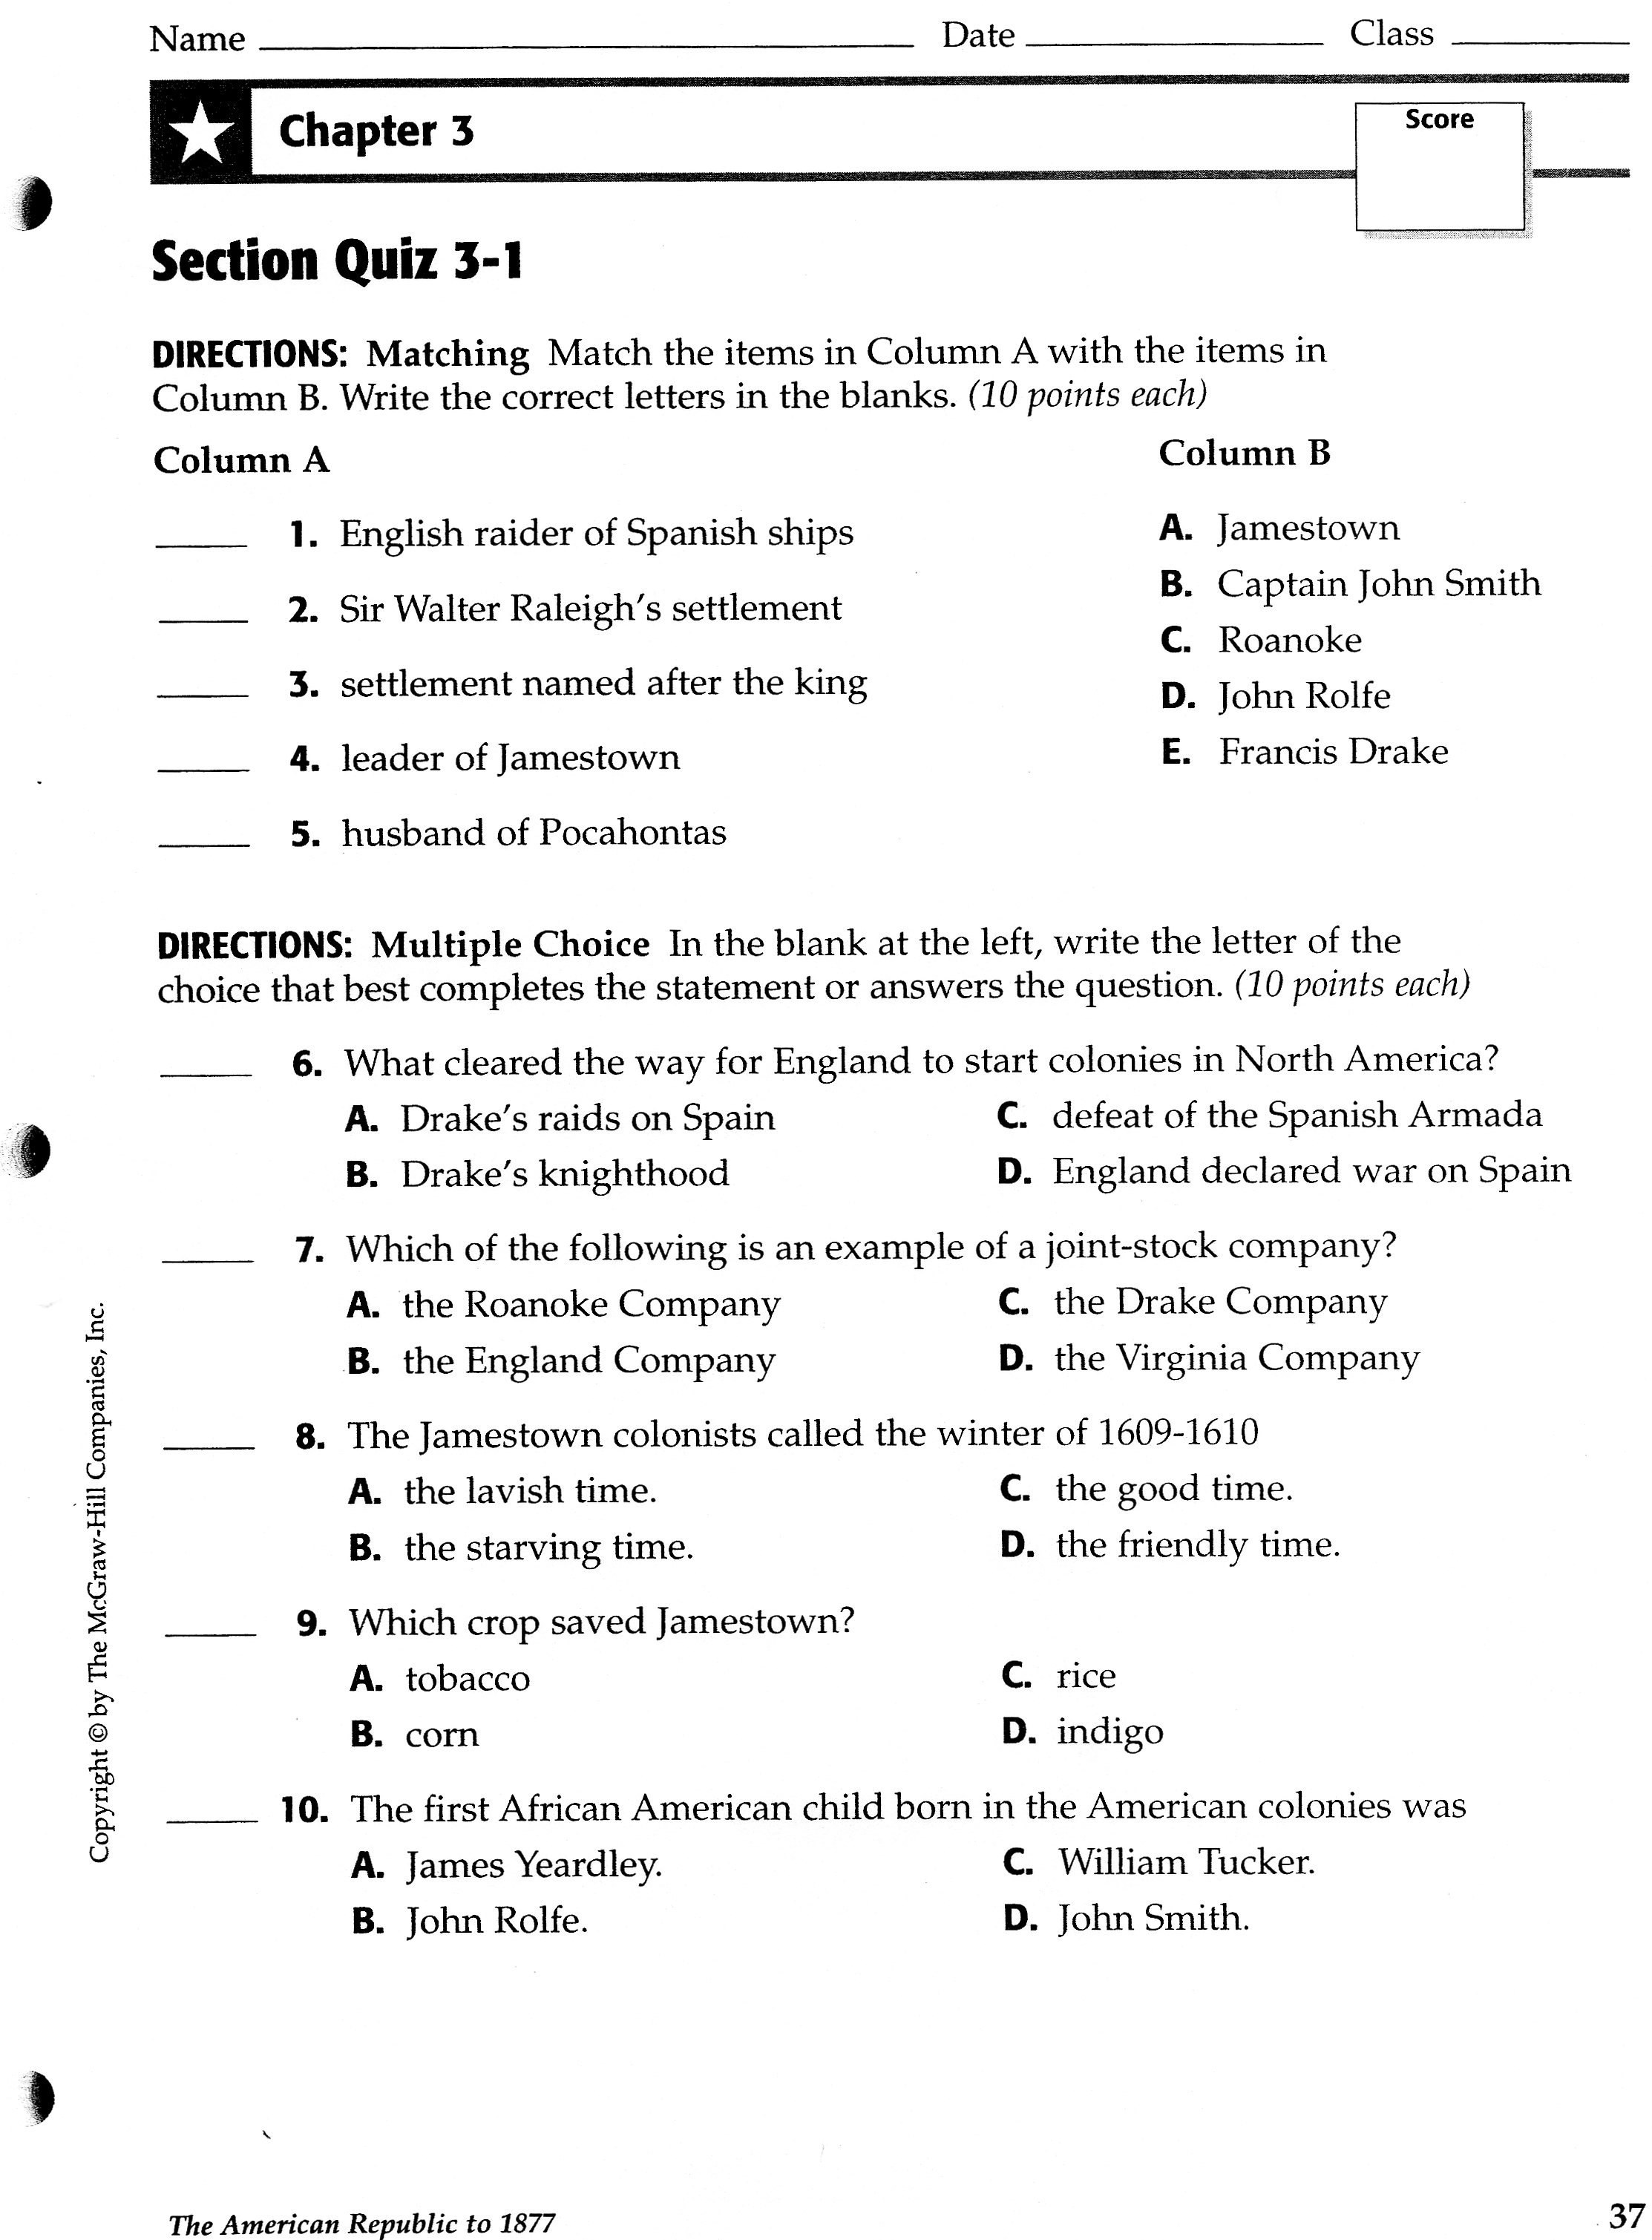 Free 7th Grade Social Studies Worksheets